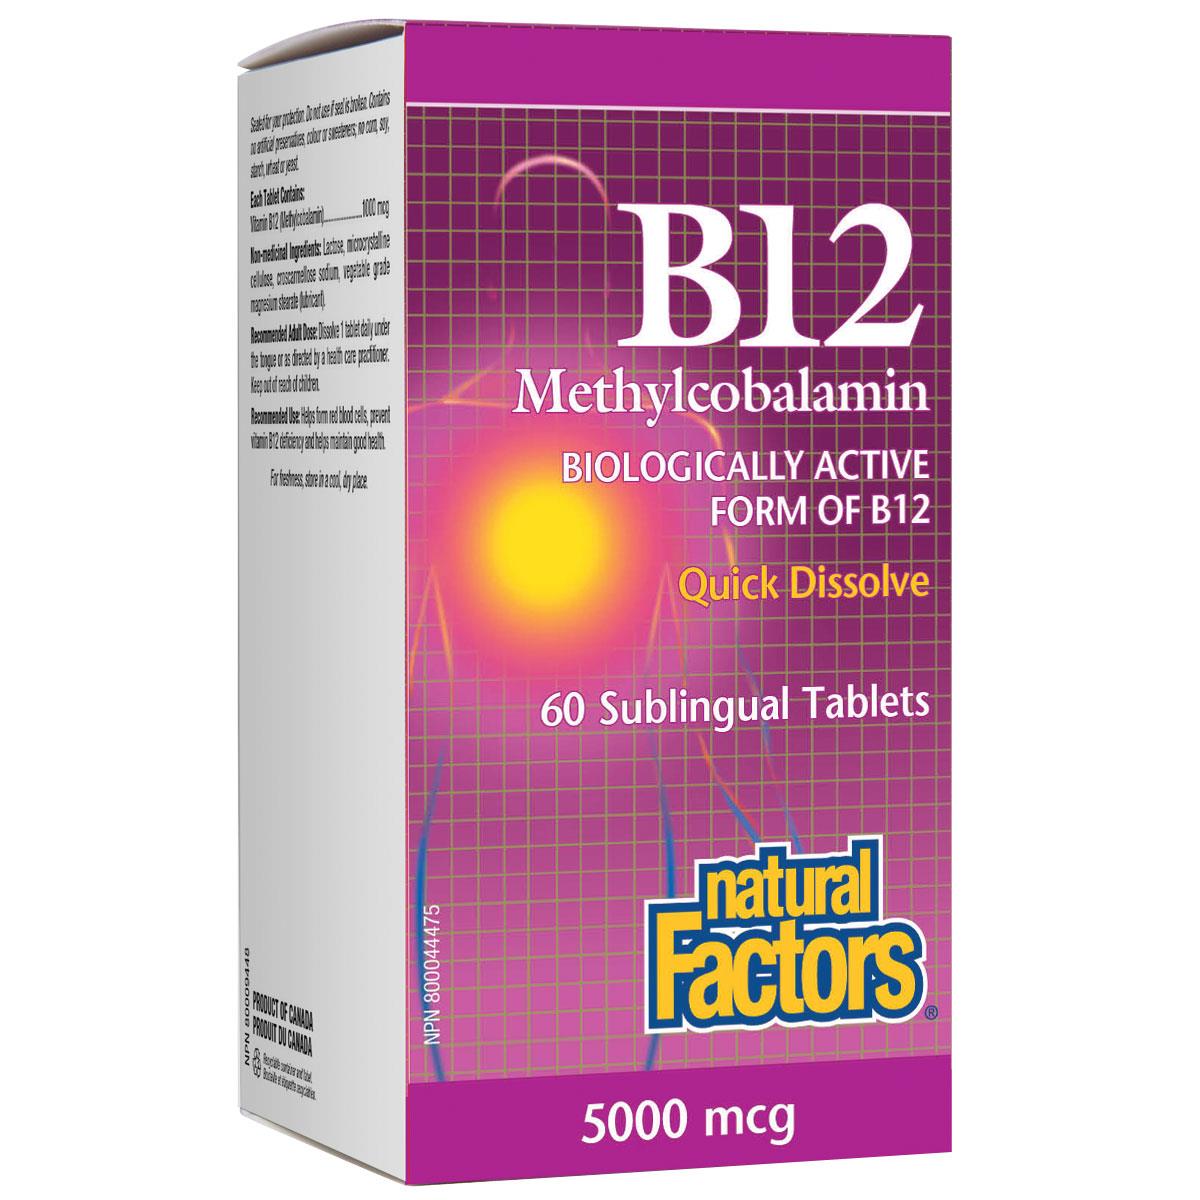 Natural Factors B12 Methylcobalamin, 5000mcg - 60 Sublingual Tabs - Homegrown Foods, Stony Plain